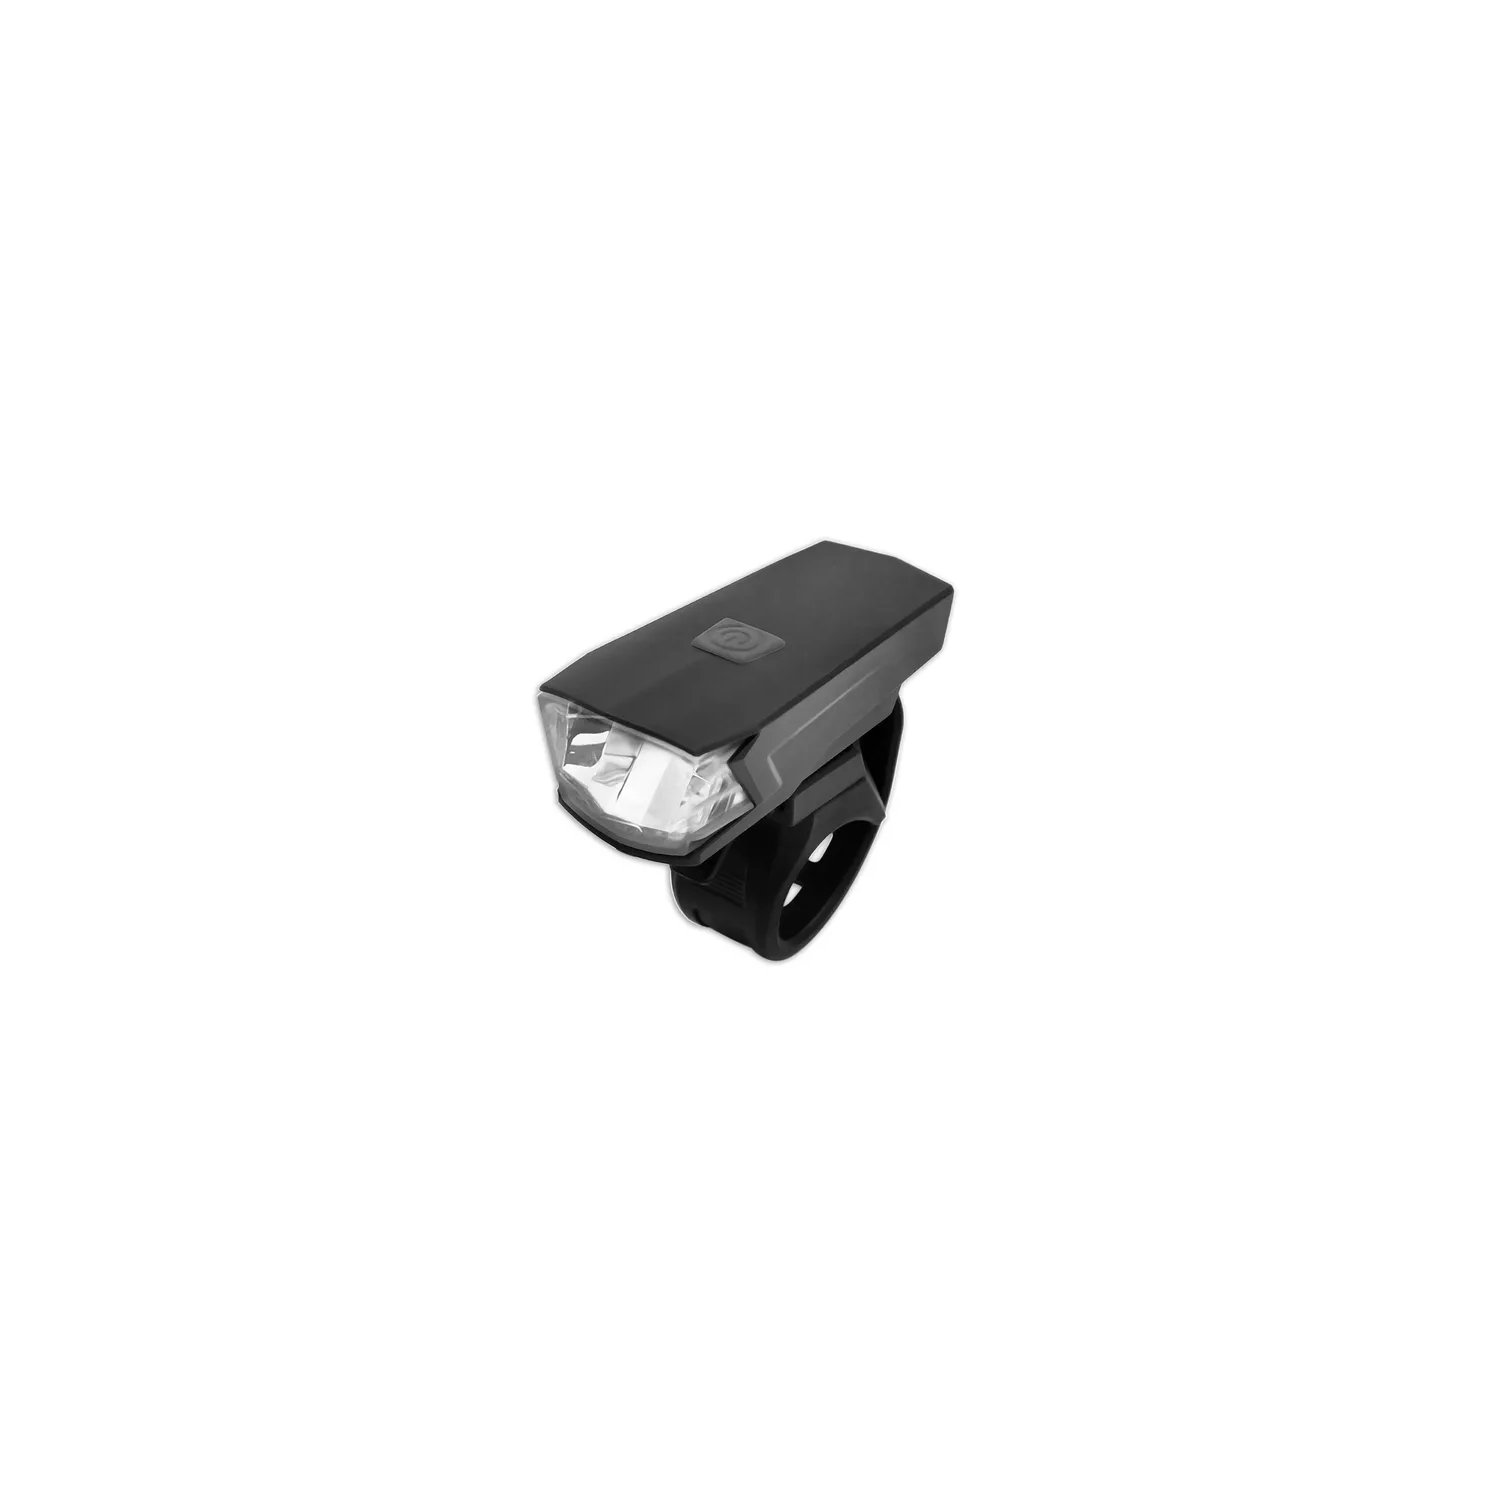 LED Vorderradleuchte USB HIGH POWER AKKU 35 LUX STVZO